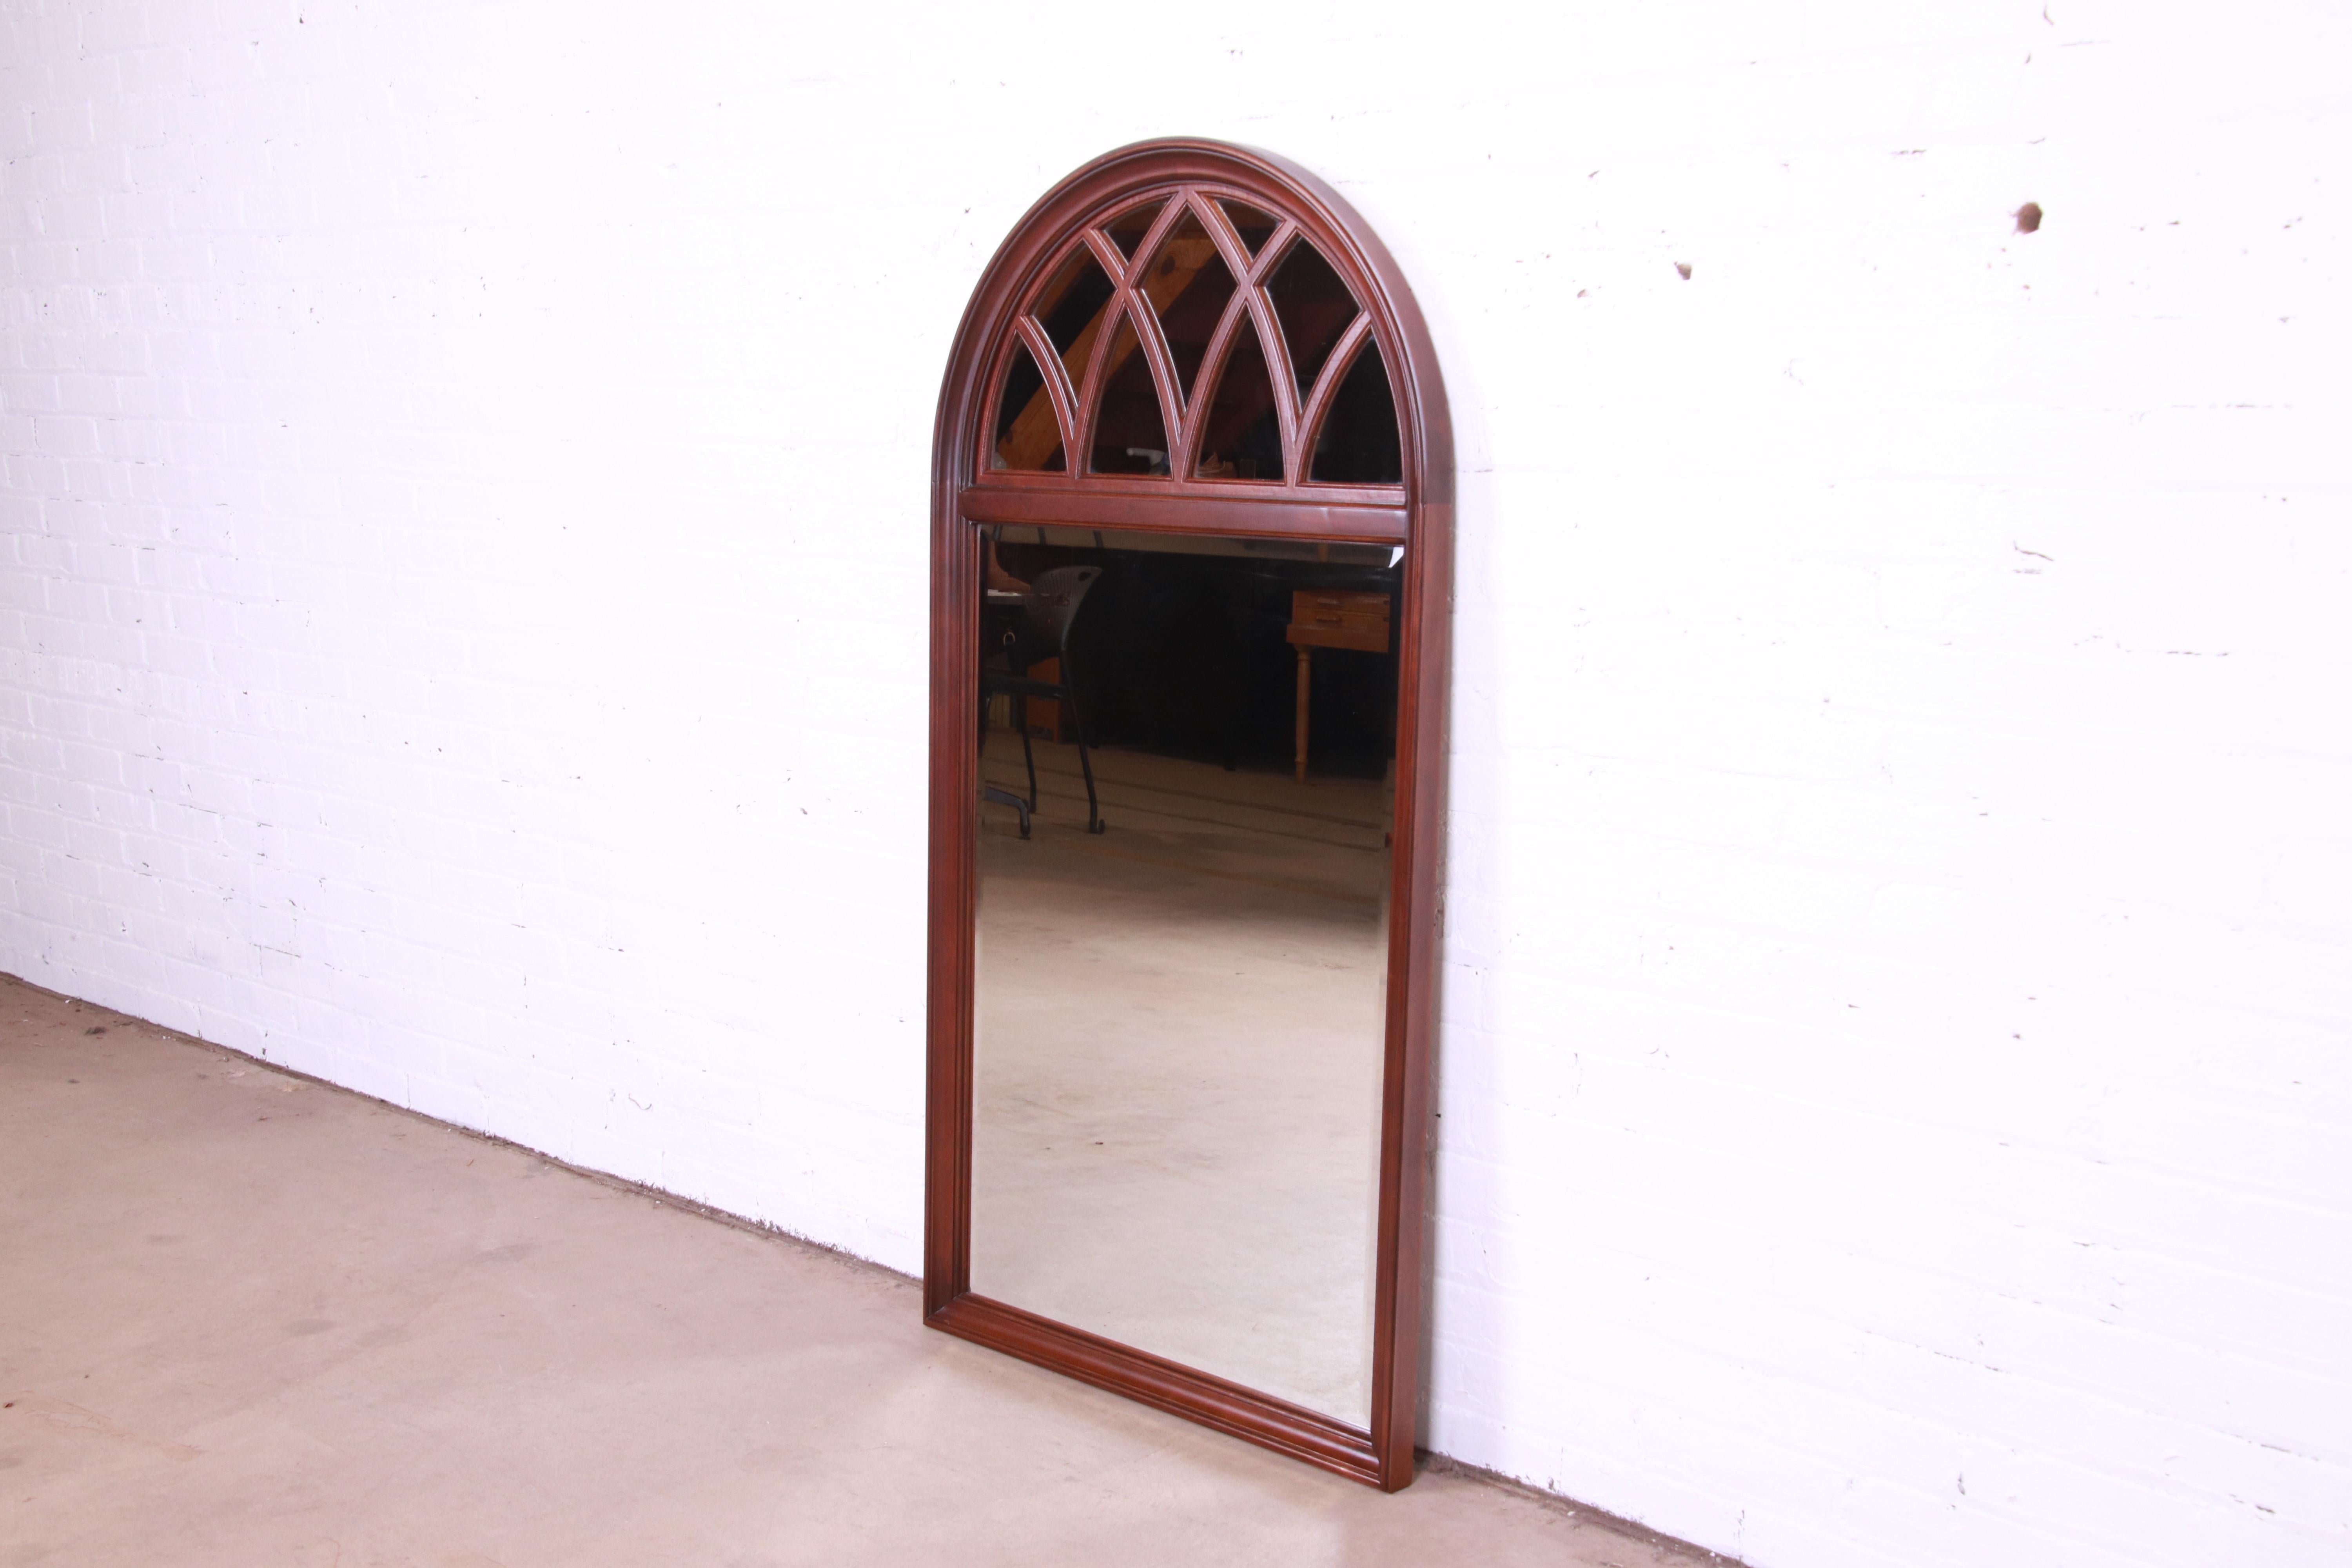 palladian mirror